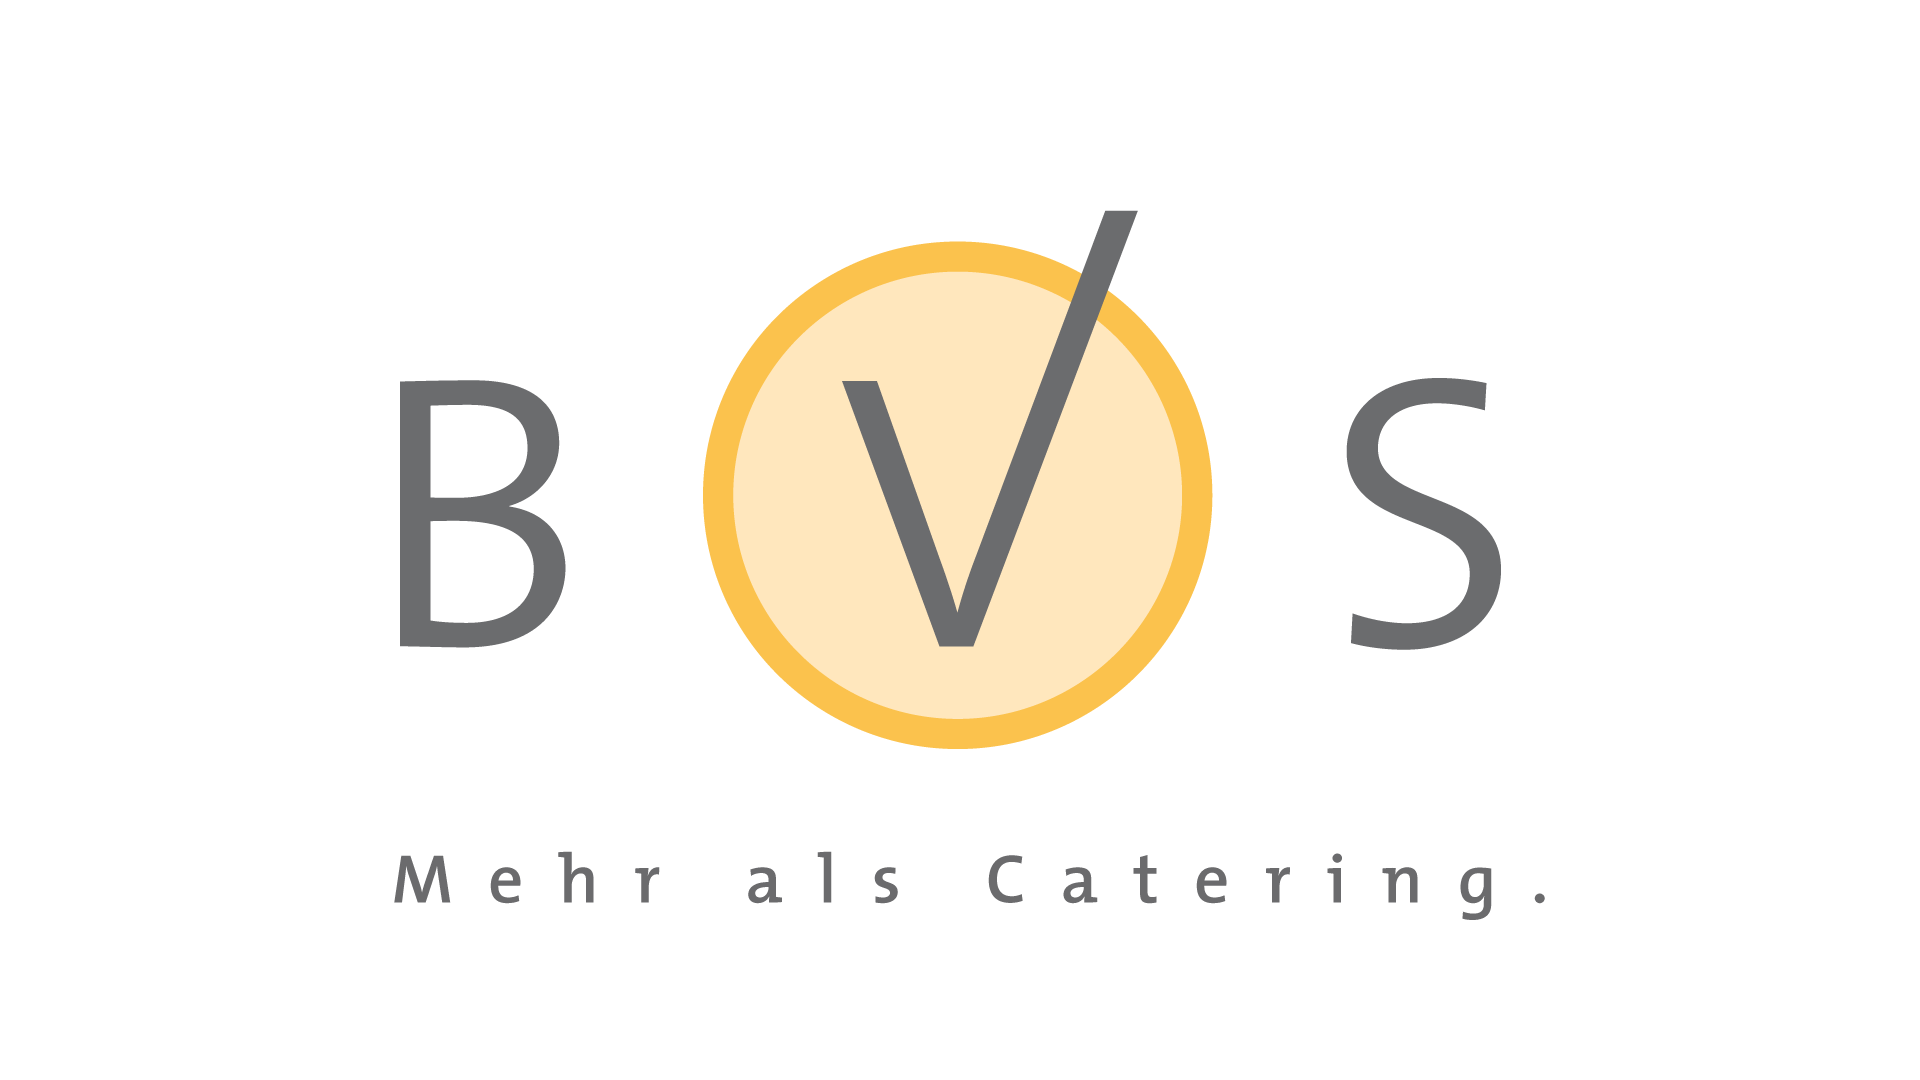 BVS Catering GmbH & Co.KG: Logo, Slogan, Corporate Design, Printmedien, Aufbau der Websites https://bvs-catering.de/ und https://bvs-catering.de/shop/